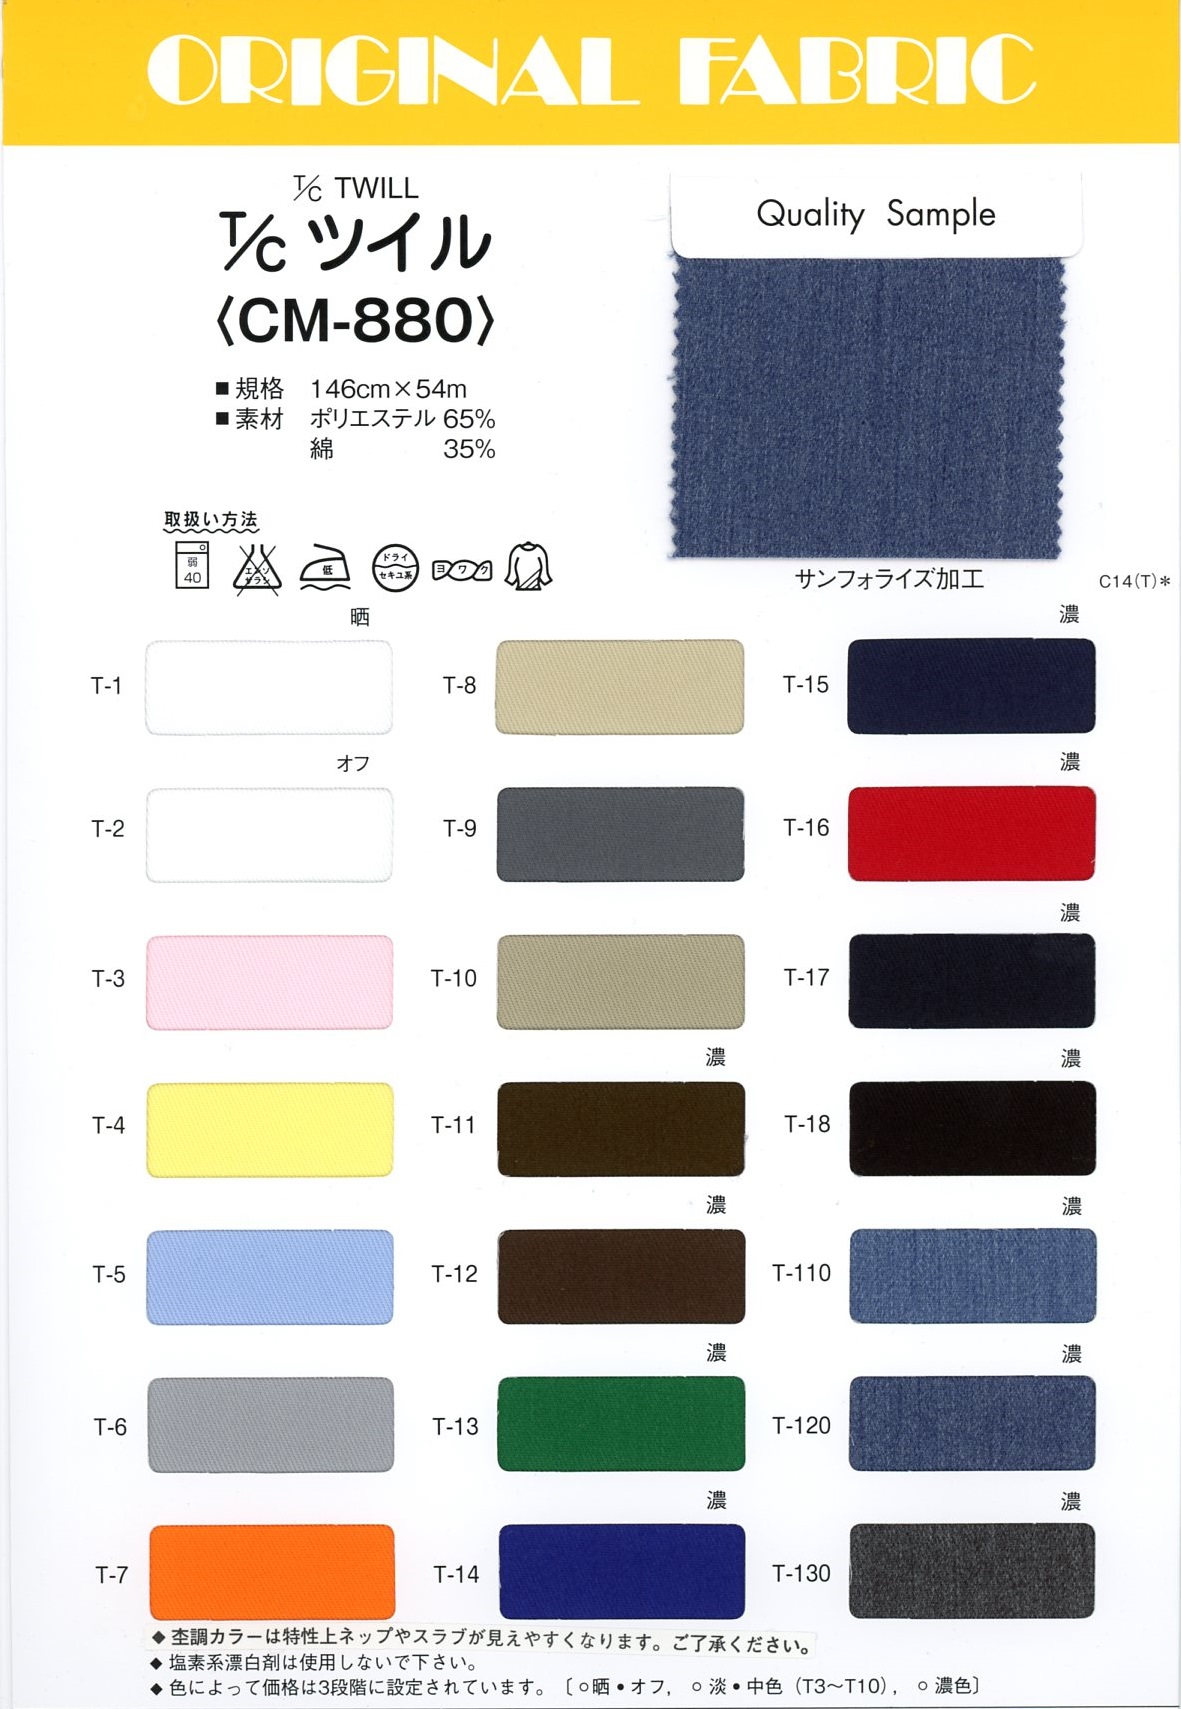 CM-880 Sarja T / C[Têxtil / Tecido] Masuda